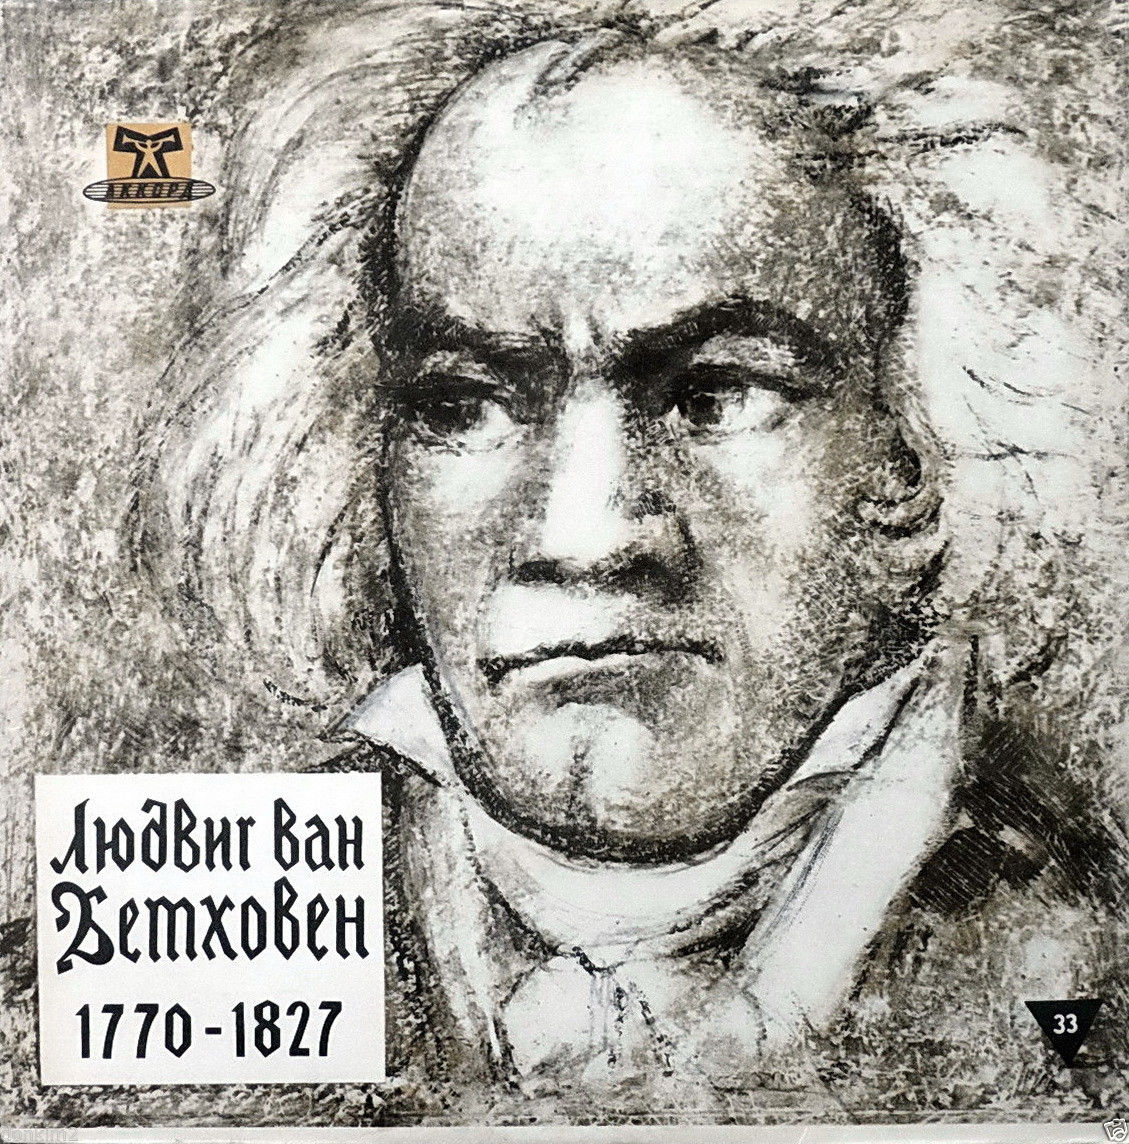 Л. БЕТХОВЕН (1770-1827) Концерт для скрипки с оркестром ре мажор, соч. 61 (Ф. Крейслер, Дж. Барбиролли)